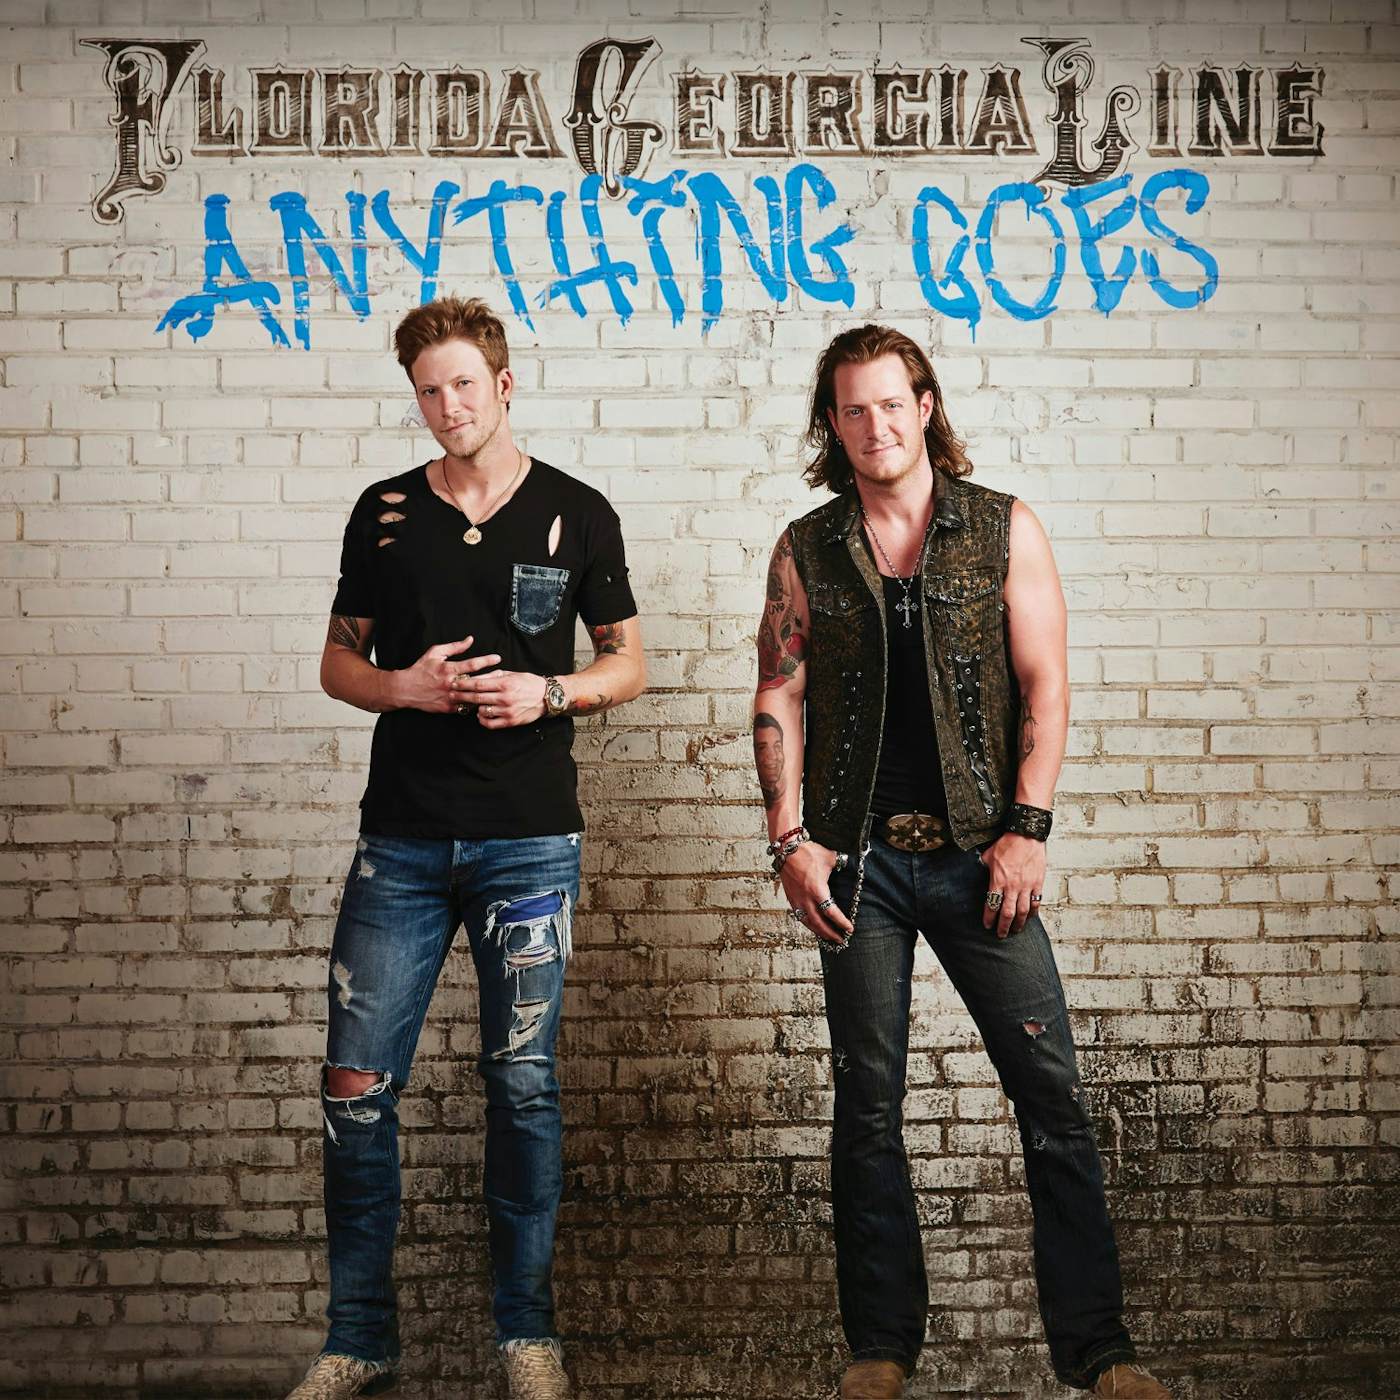 Florida Georgia Line ANYTHING GOES CD